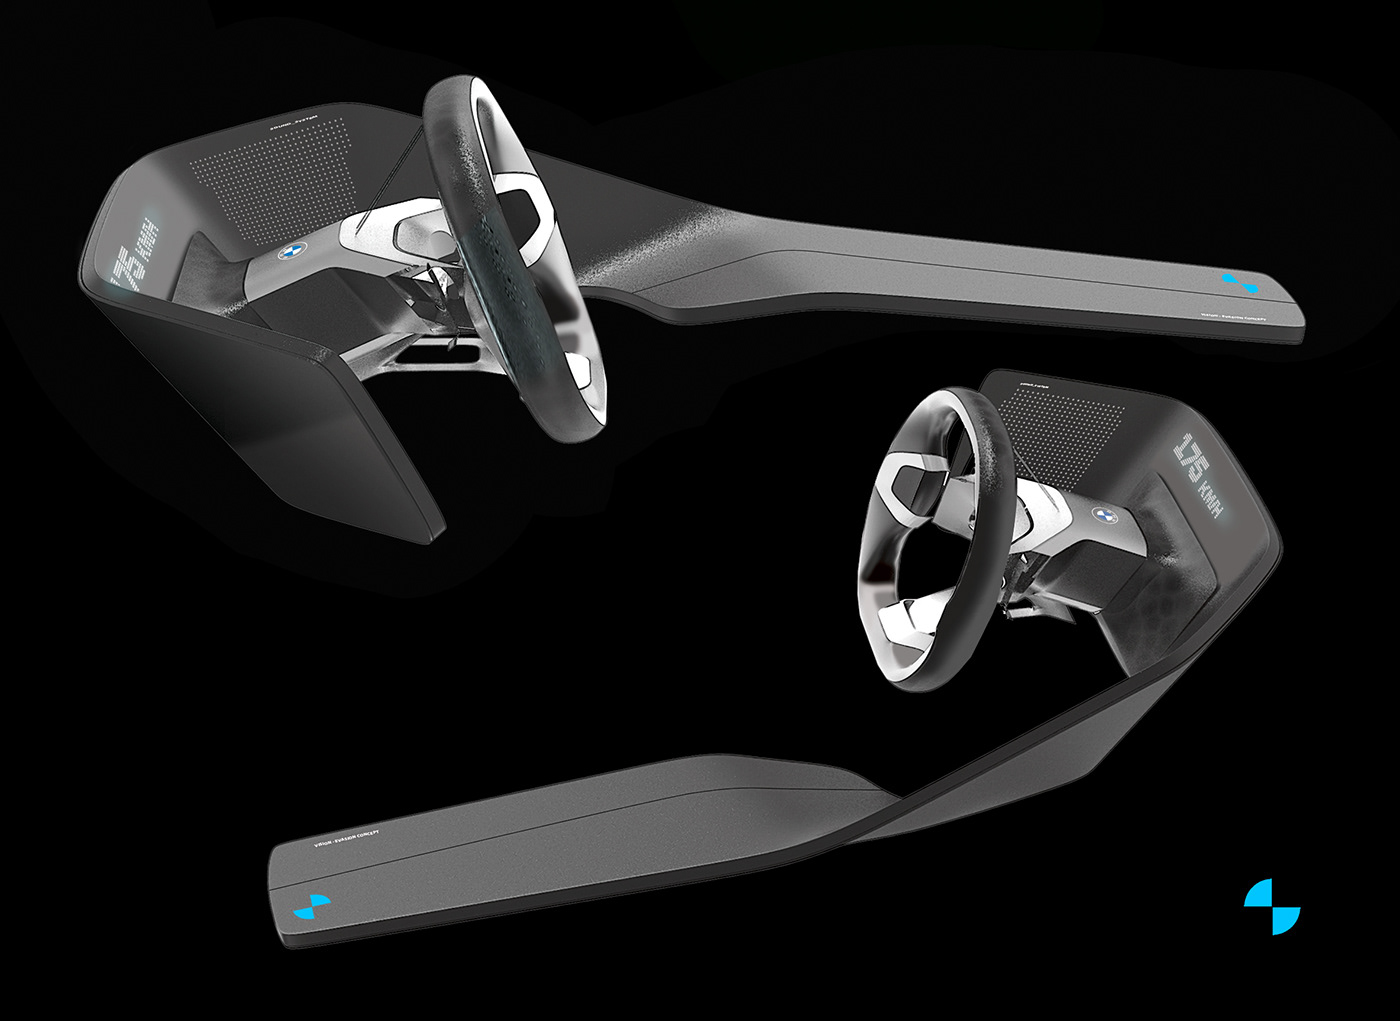 art automotivdesign BMW car cardesign cardesignsketch concept ILLUSTRATION  industrialdesign sketch